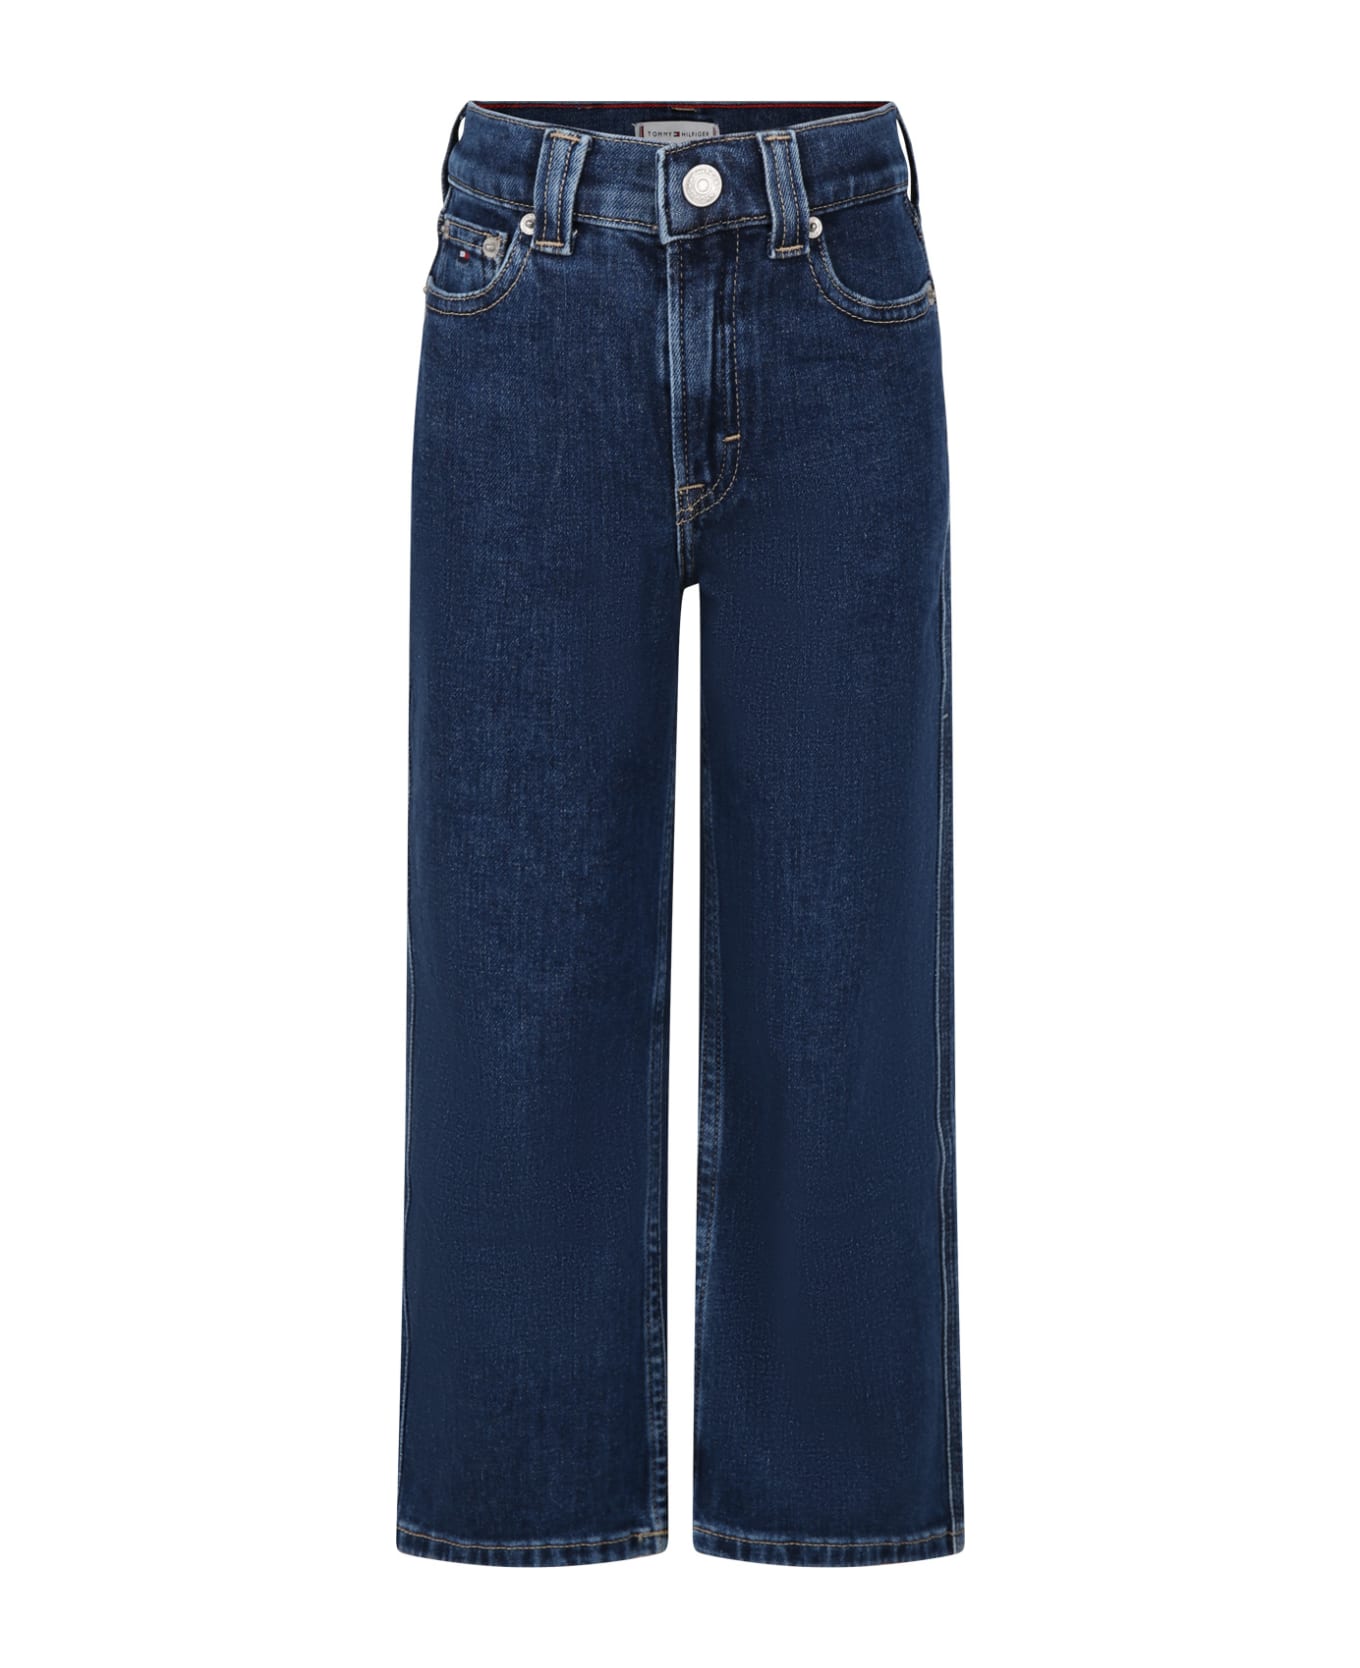 Tommy Hilfiger Denim Jeans For Girl With Logo - Denim ボトムス